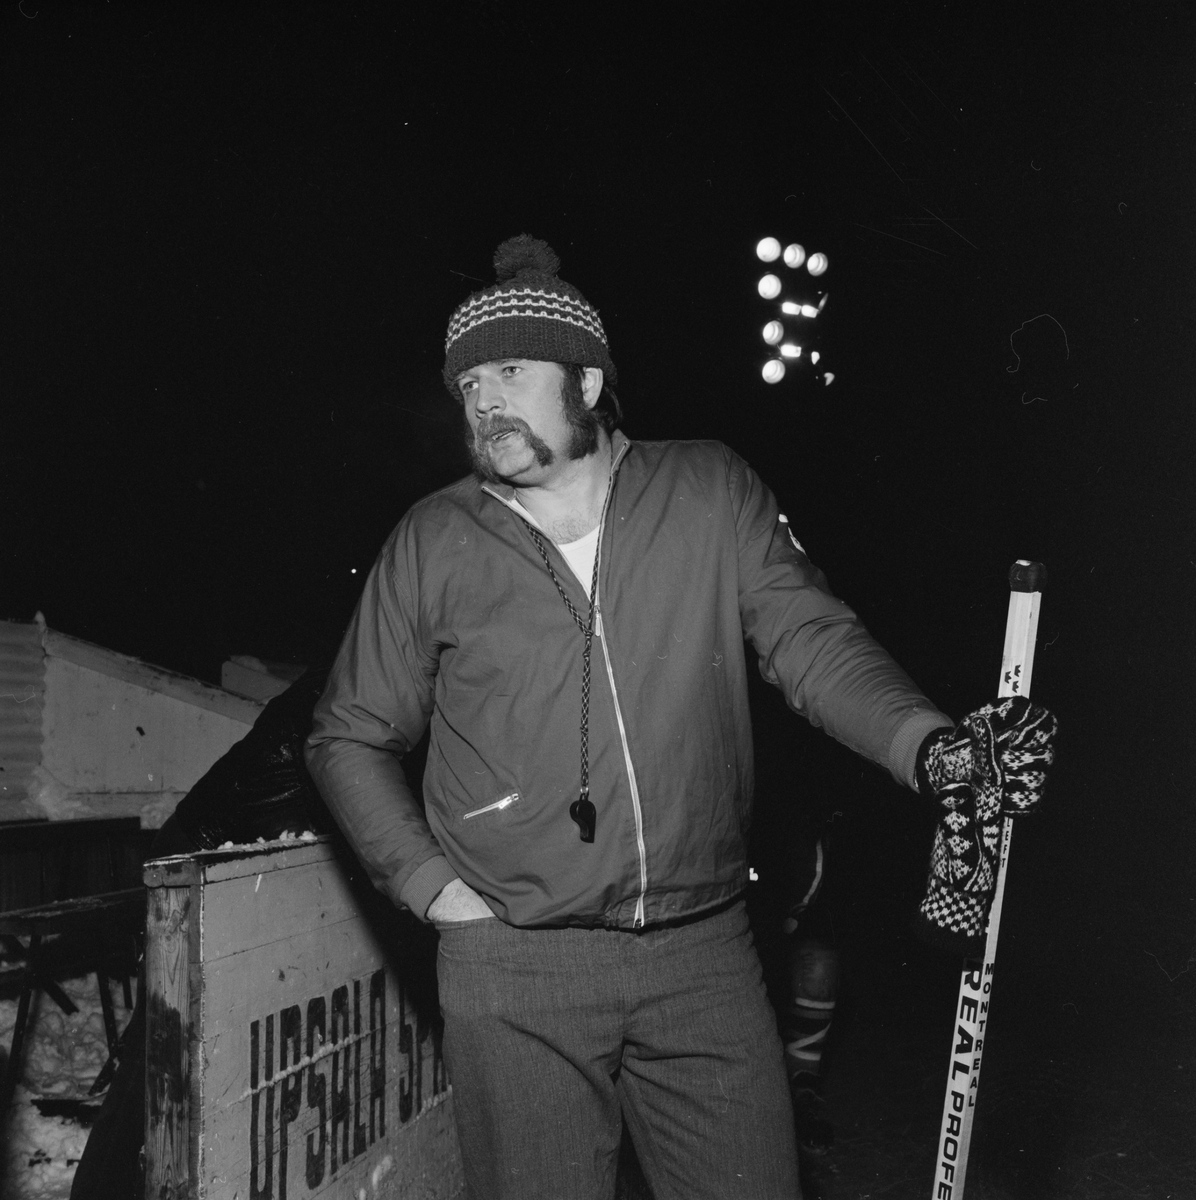 Ishockeytränare i Tierp, Uppland, februari 1972